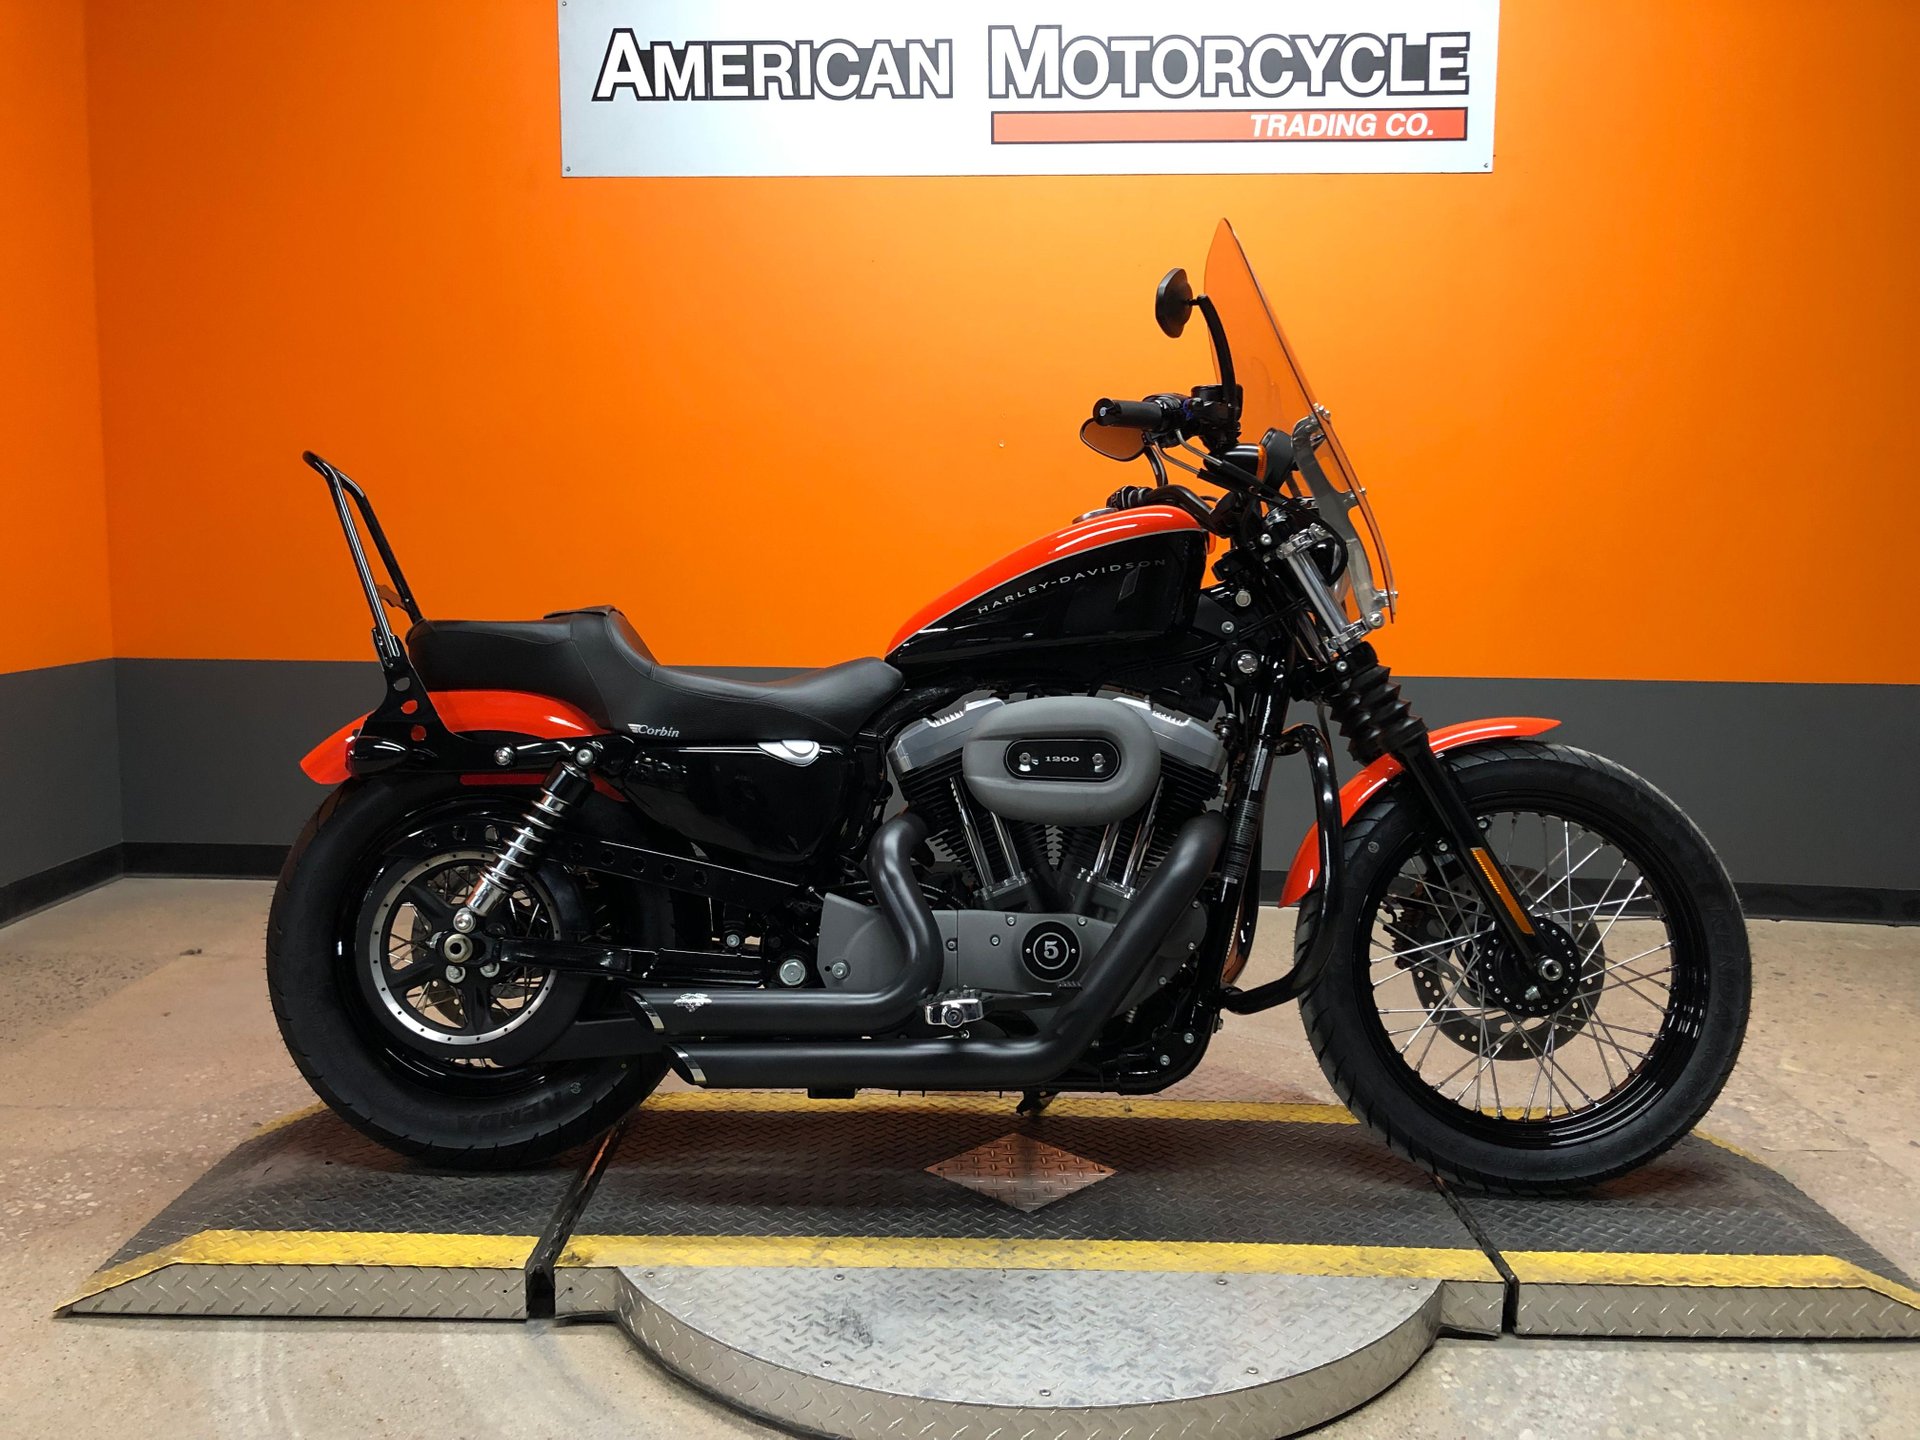 2009 Harley-Davidson Sportster 1200 | American Motorcycle Trading Company -  Used Harley Davidson Motorcycles